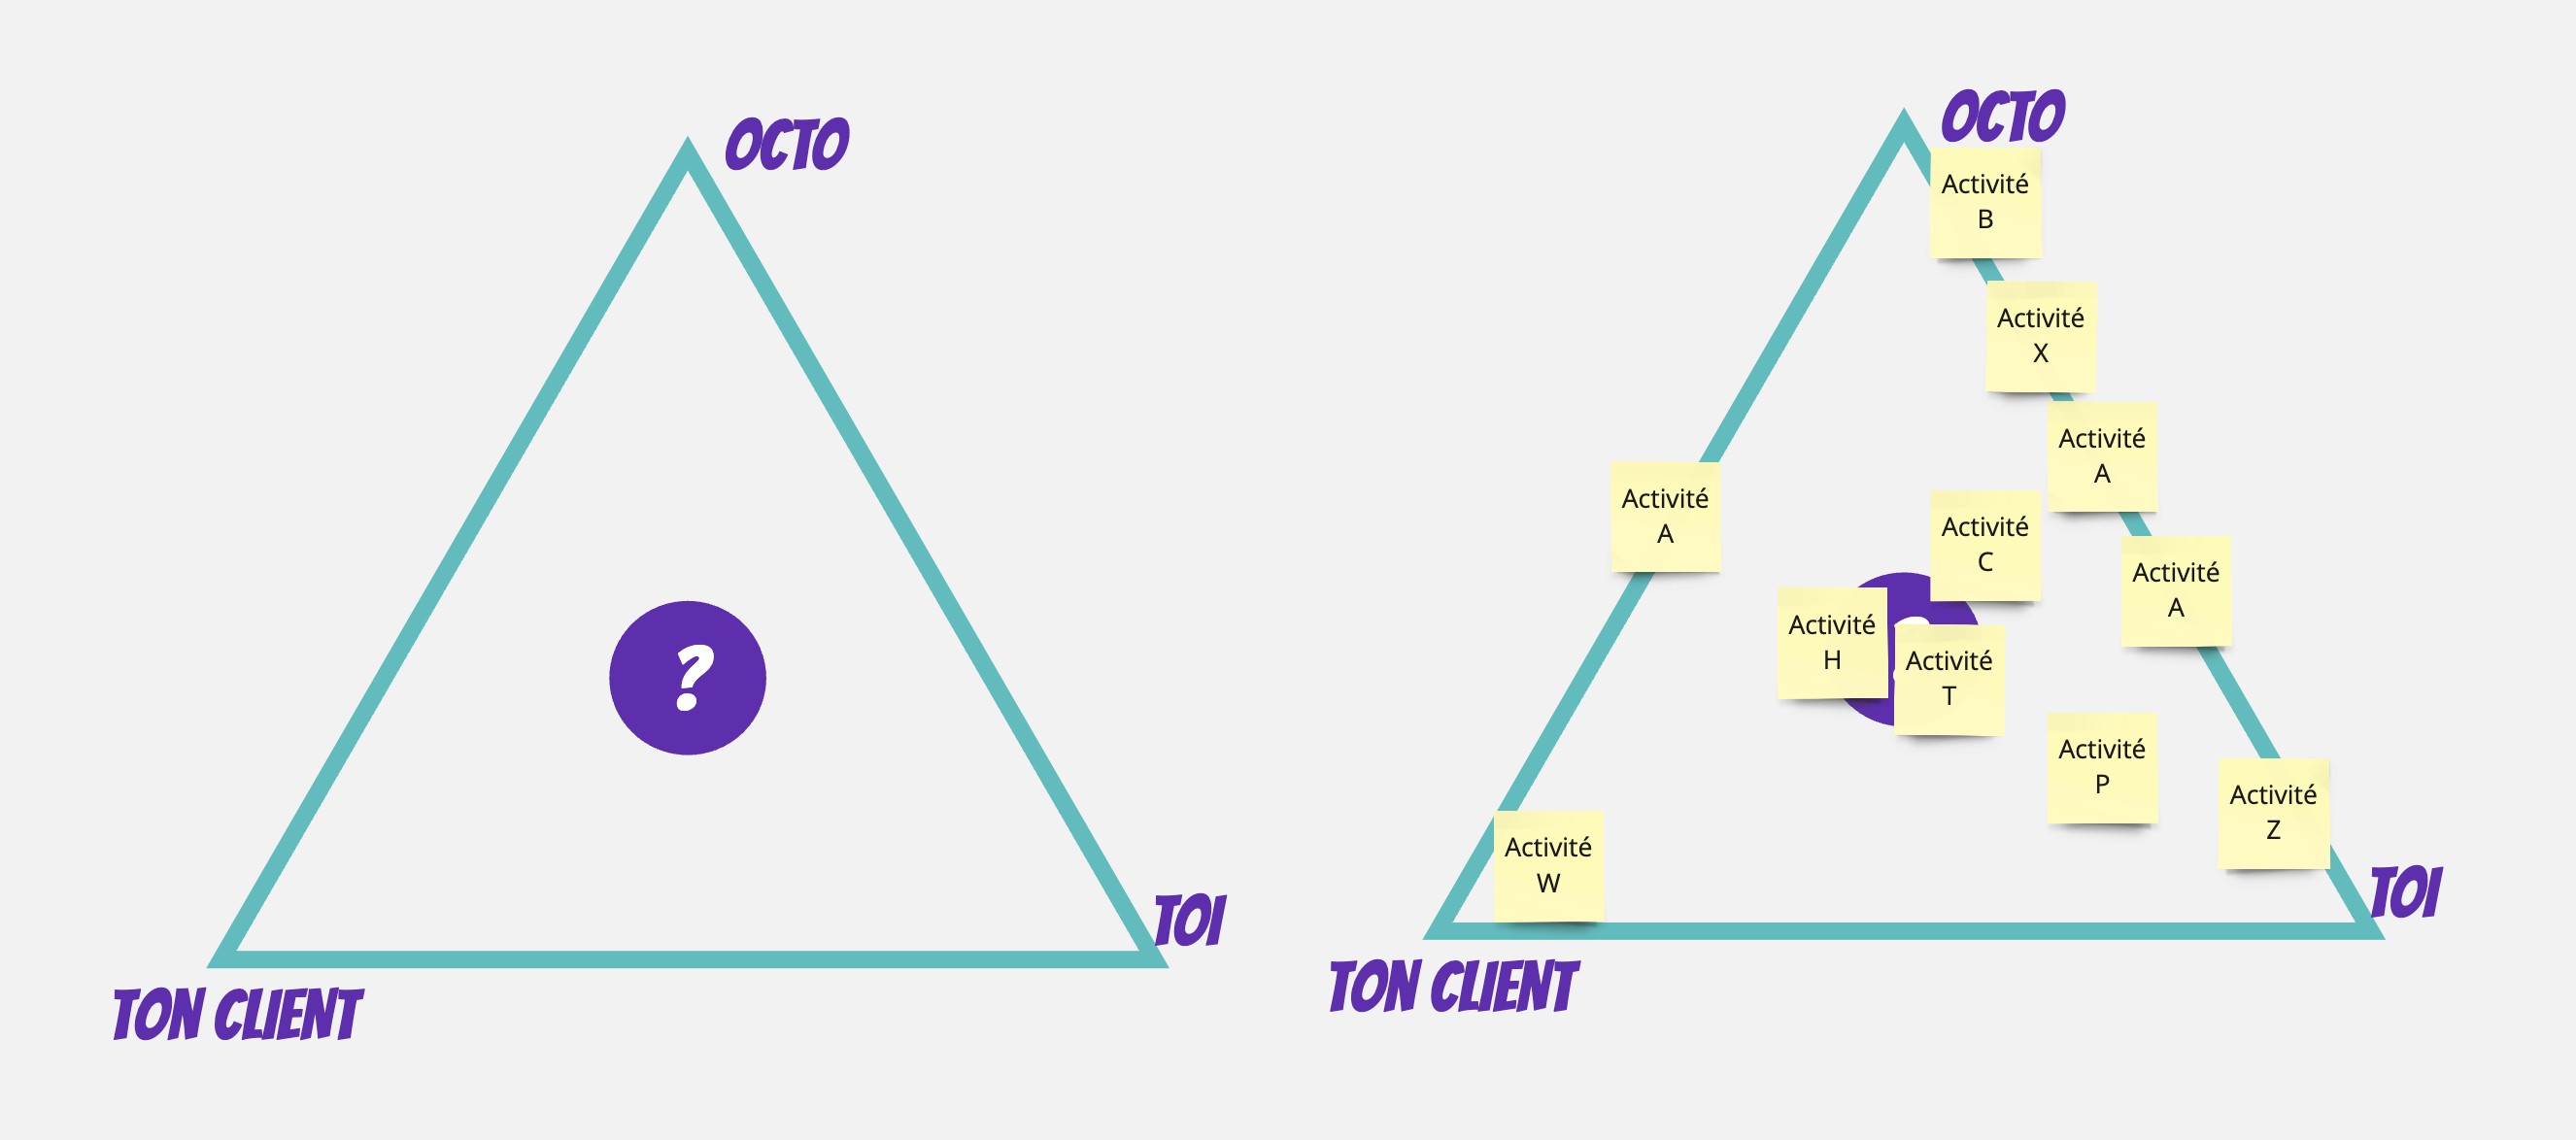 Format Miro d'un triangle Client OCTO Toi